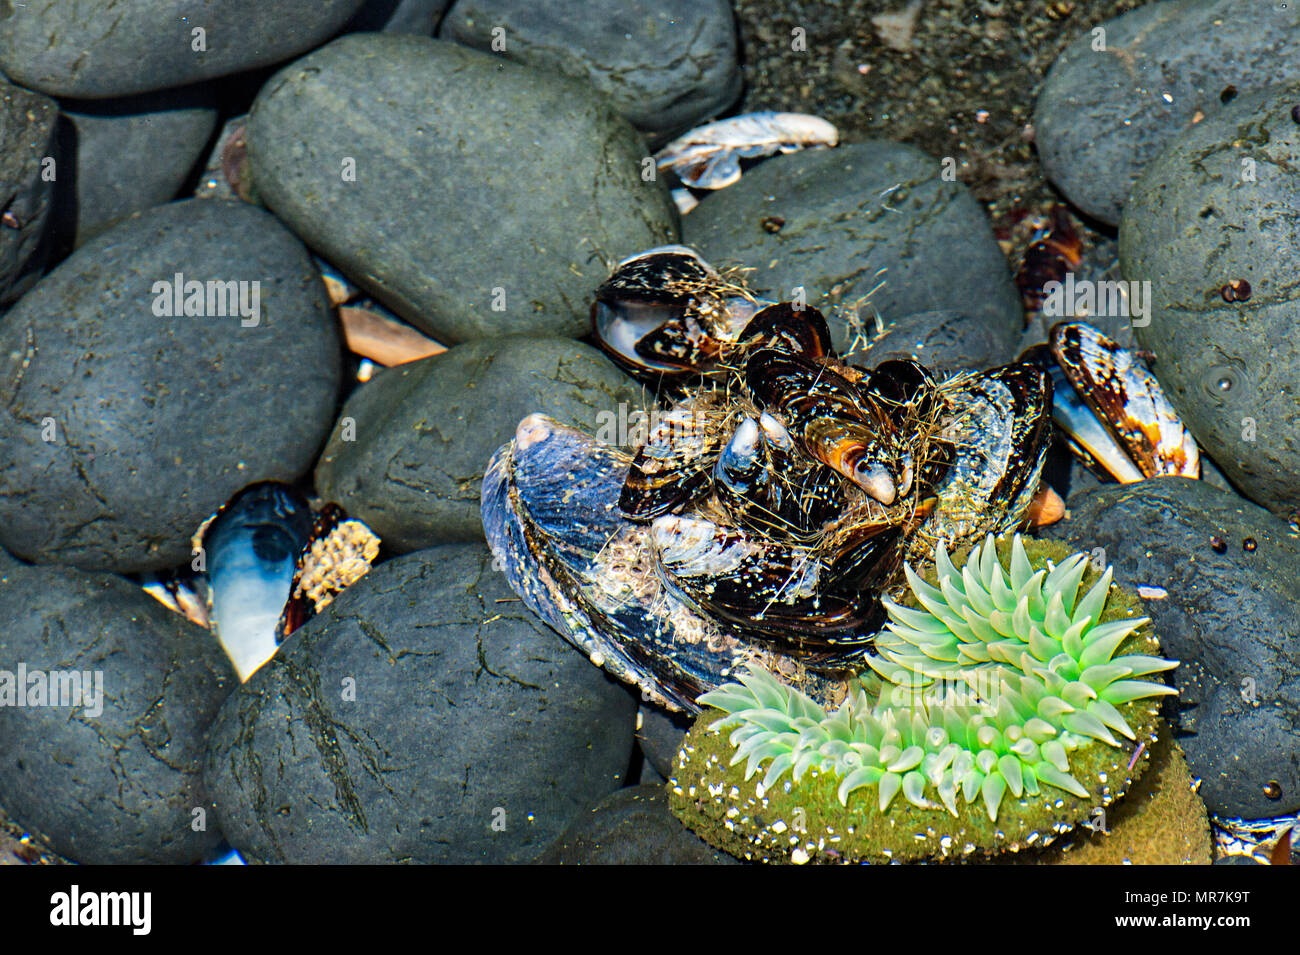 Lava cobblestone, California mussels and sea anemone found in tide pool at Yaquina Head State Park in Newport, Oregon Stock Photo